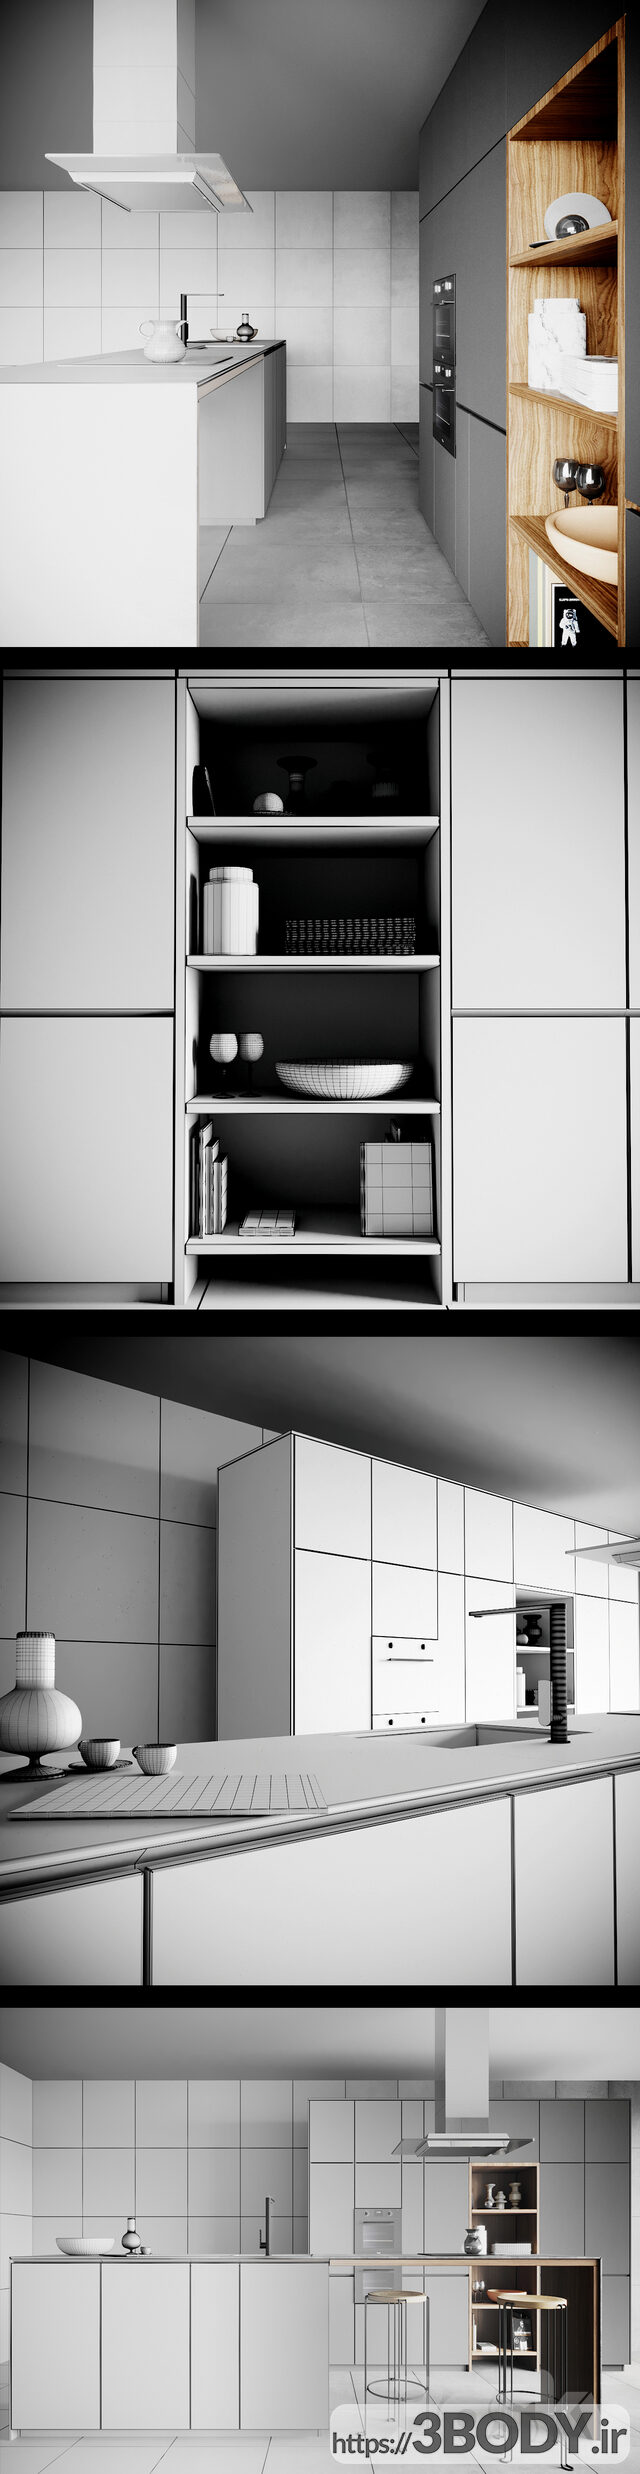 آبجکت سه بعدی  کابینت آشپزخانه مدرن عکس 2